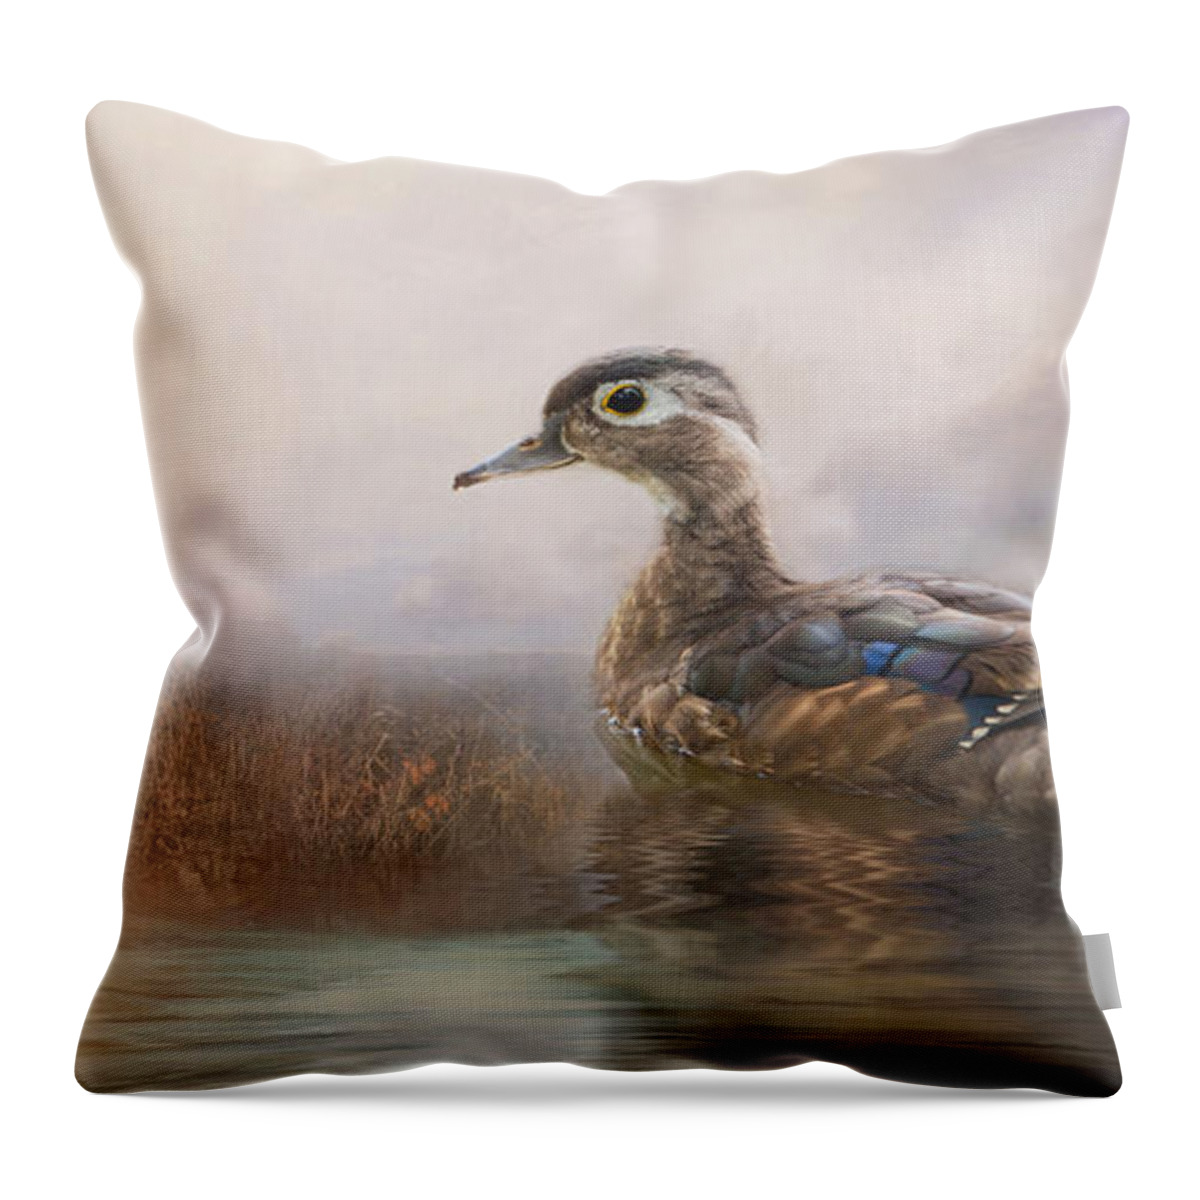 Ducks Throw Pillow featuring the photograph Wood Duck by Robin-Lee Vieira